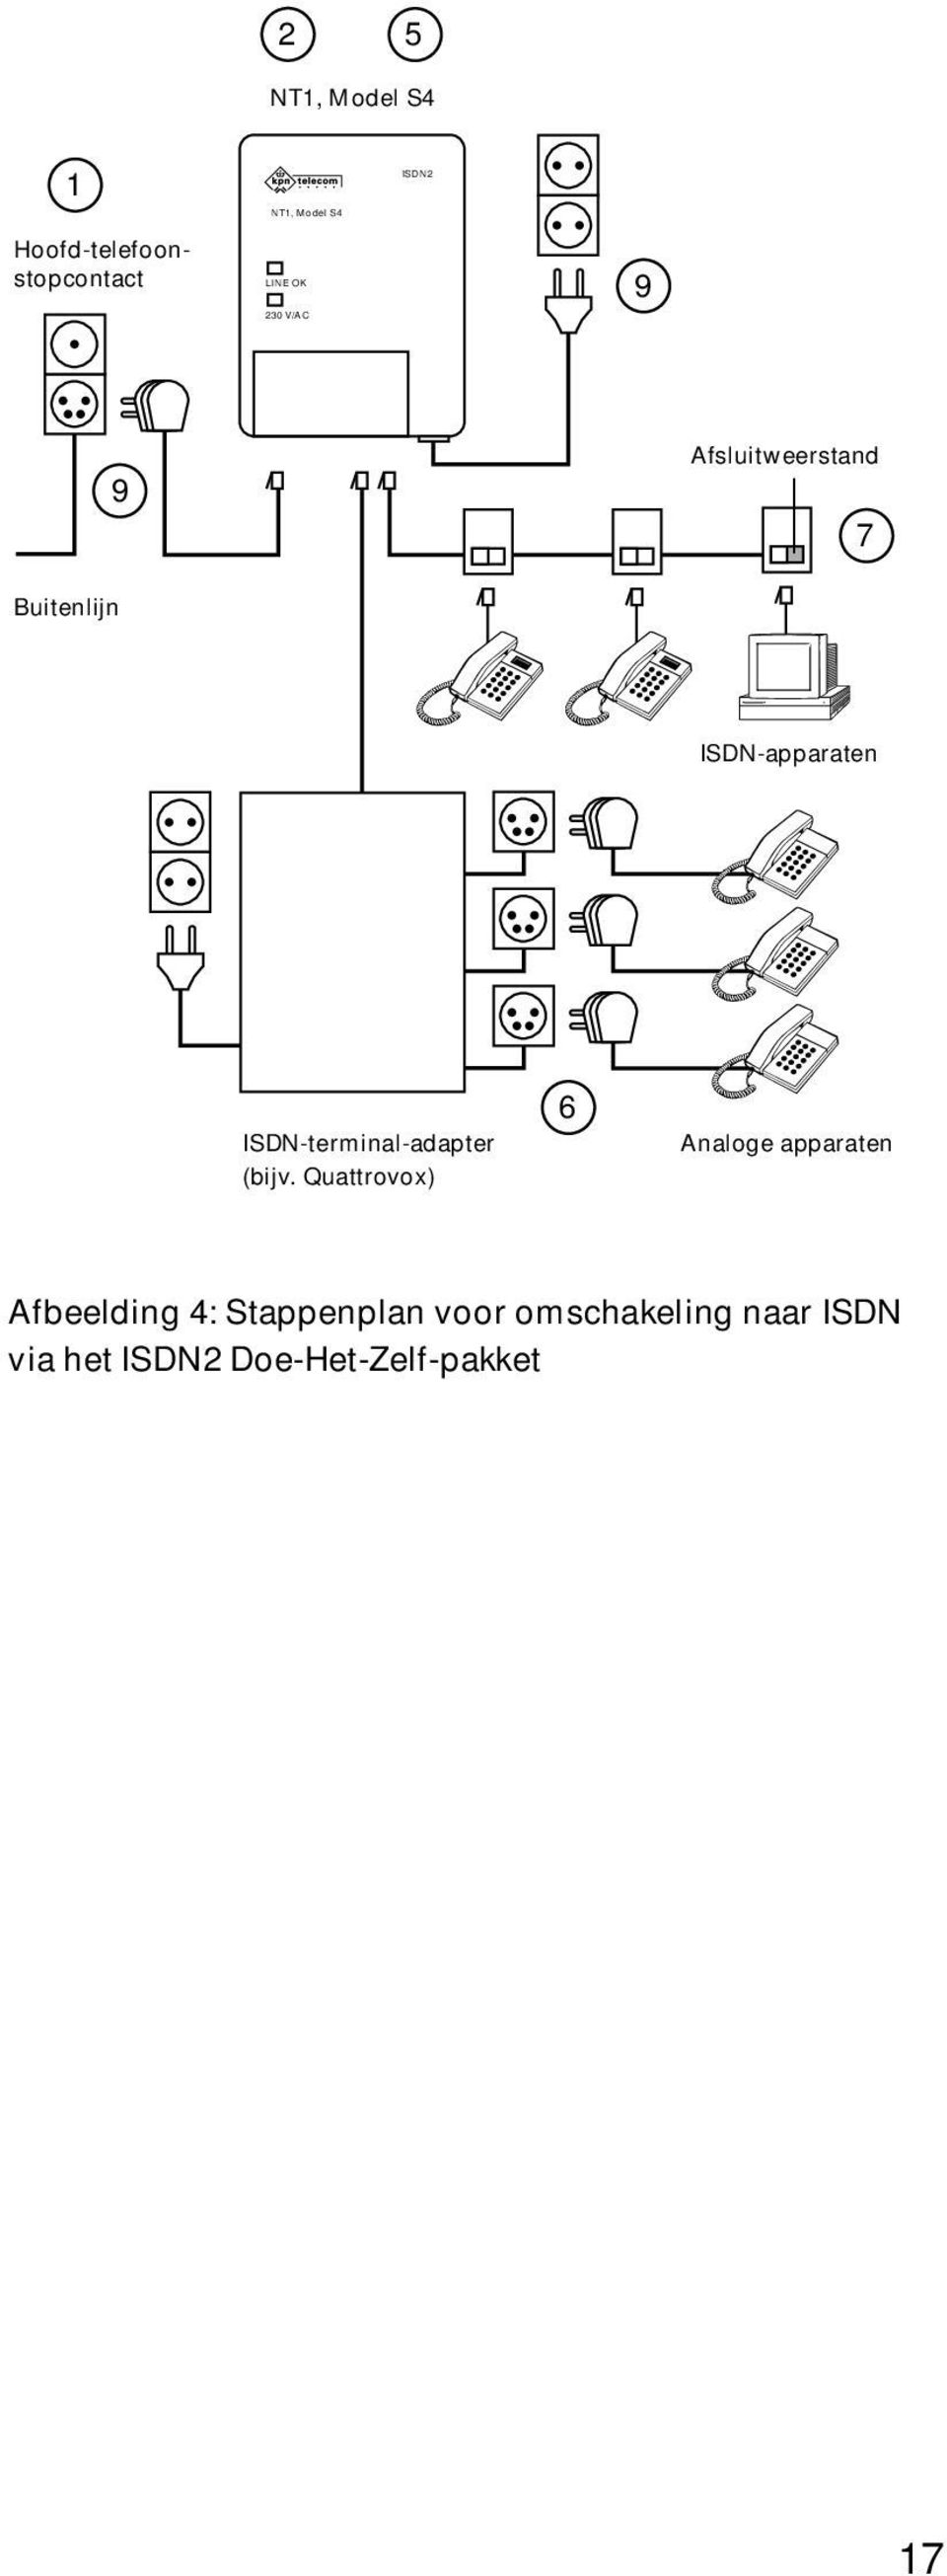 ISDN-terminal-adapter (bijv.